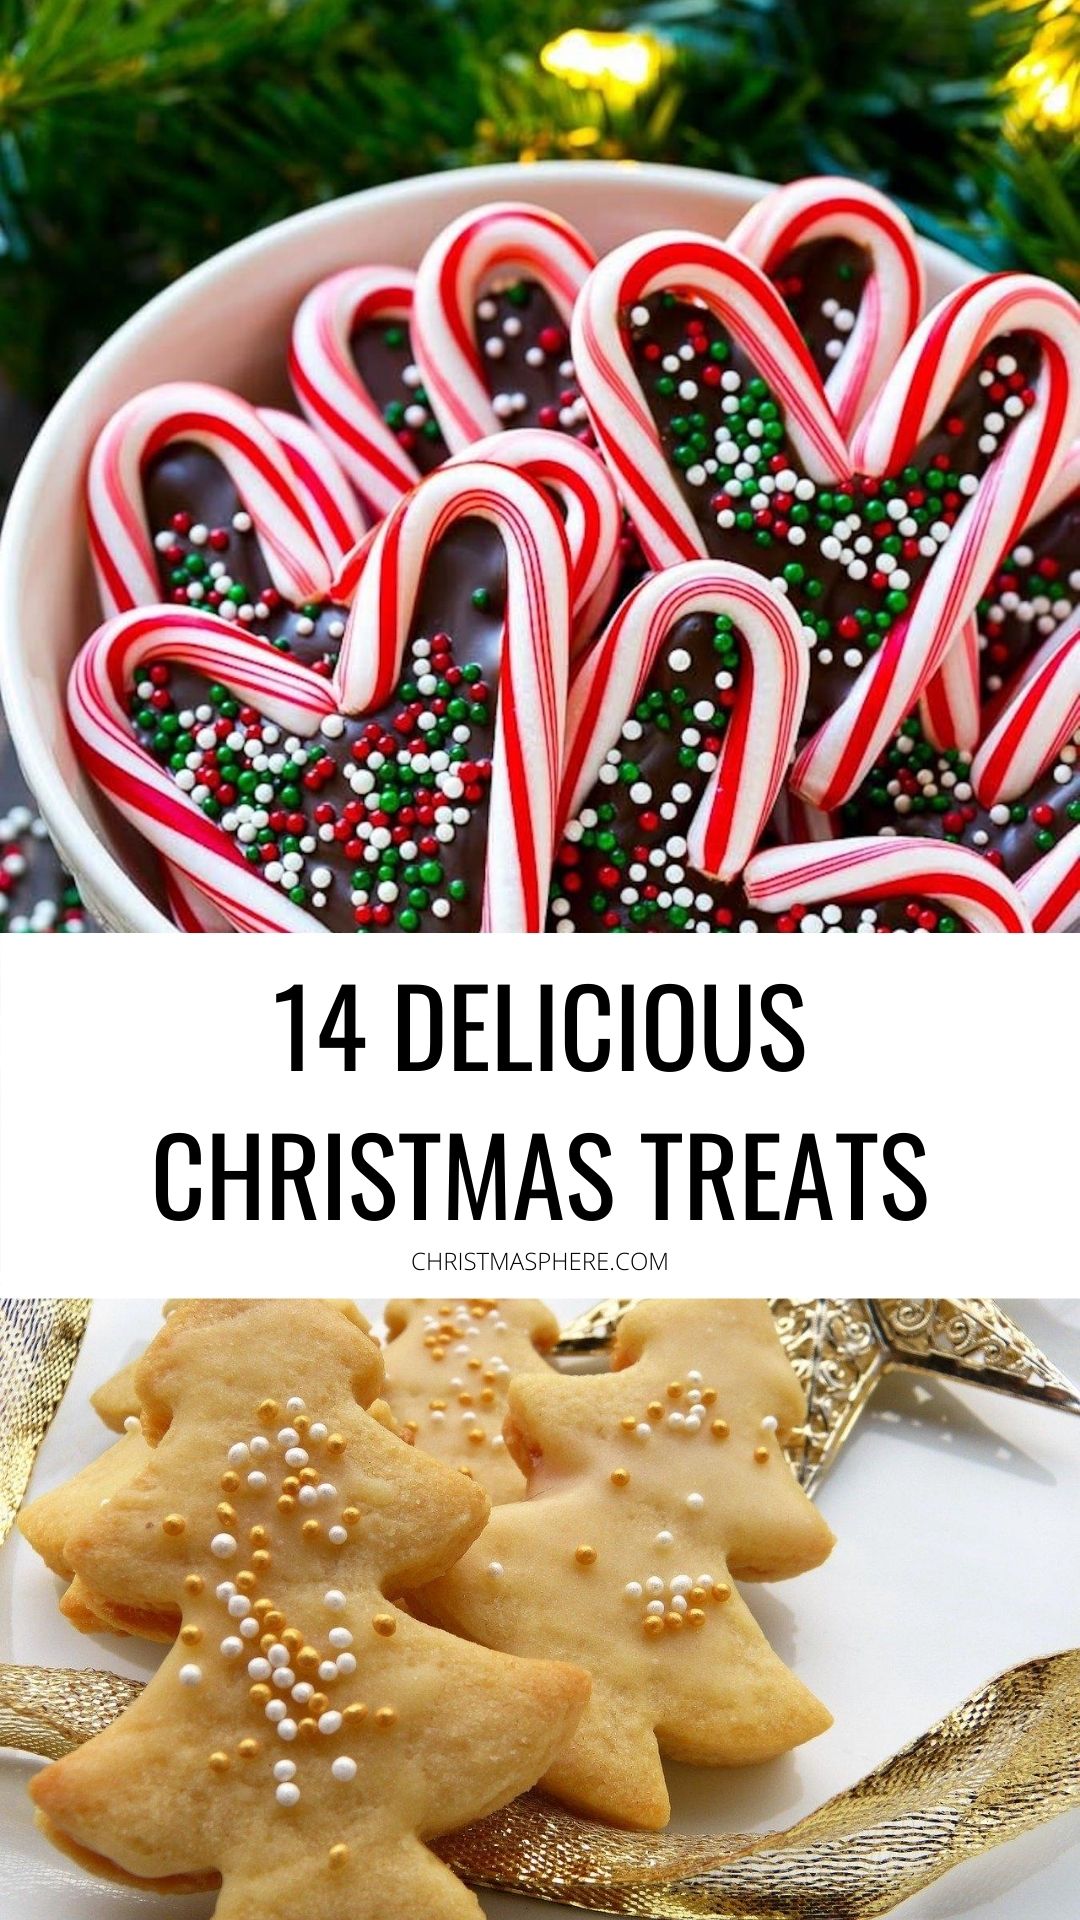 14 Delicious Christmas Treats